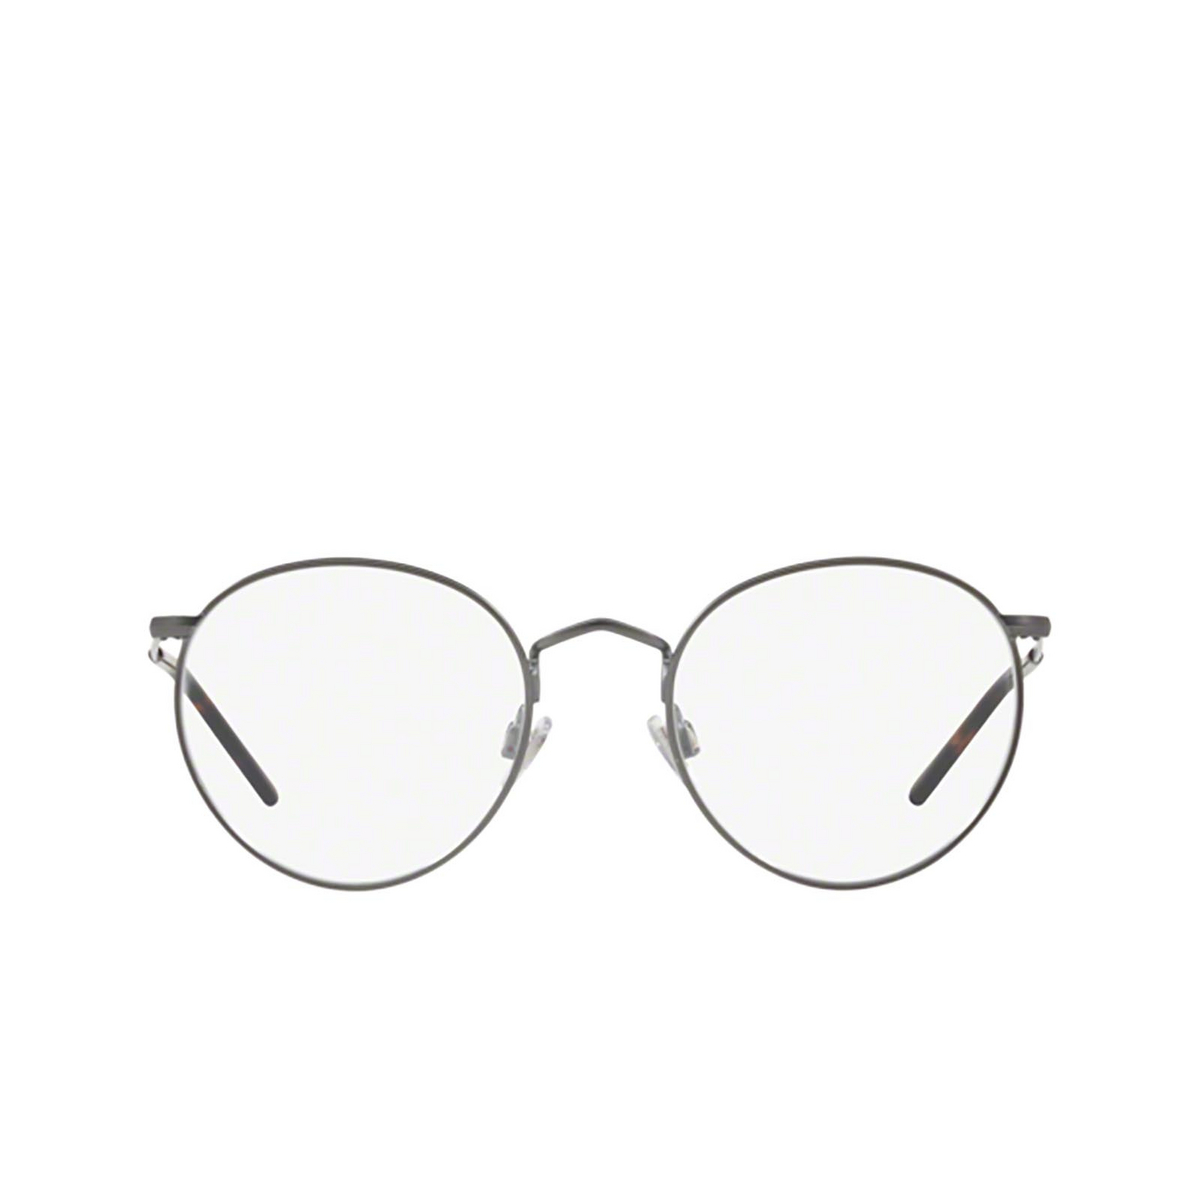 Polo Ralph Lauren® Round Eyeglasses: PH1179 color Semi-shiny Dark Gunmetal 9157 - front view.